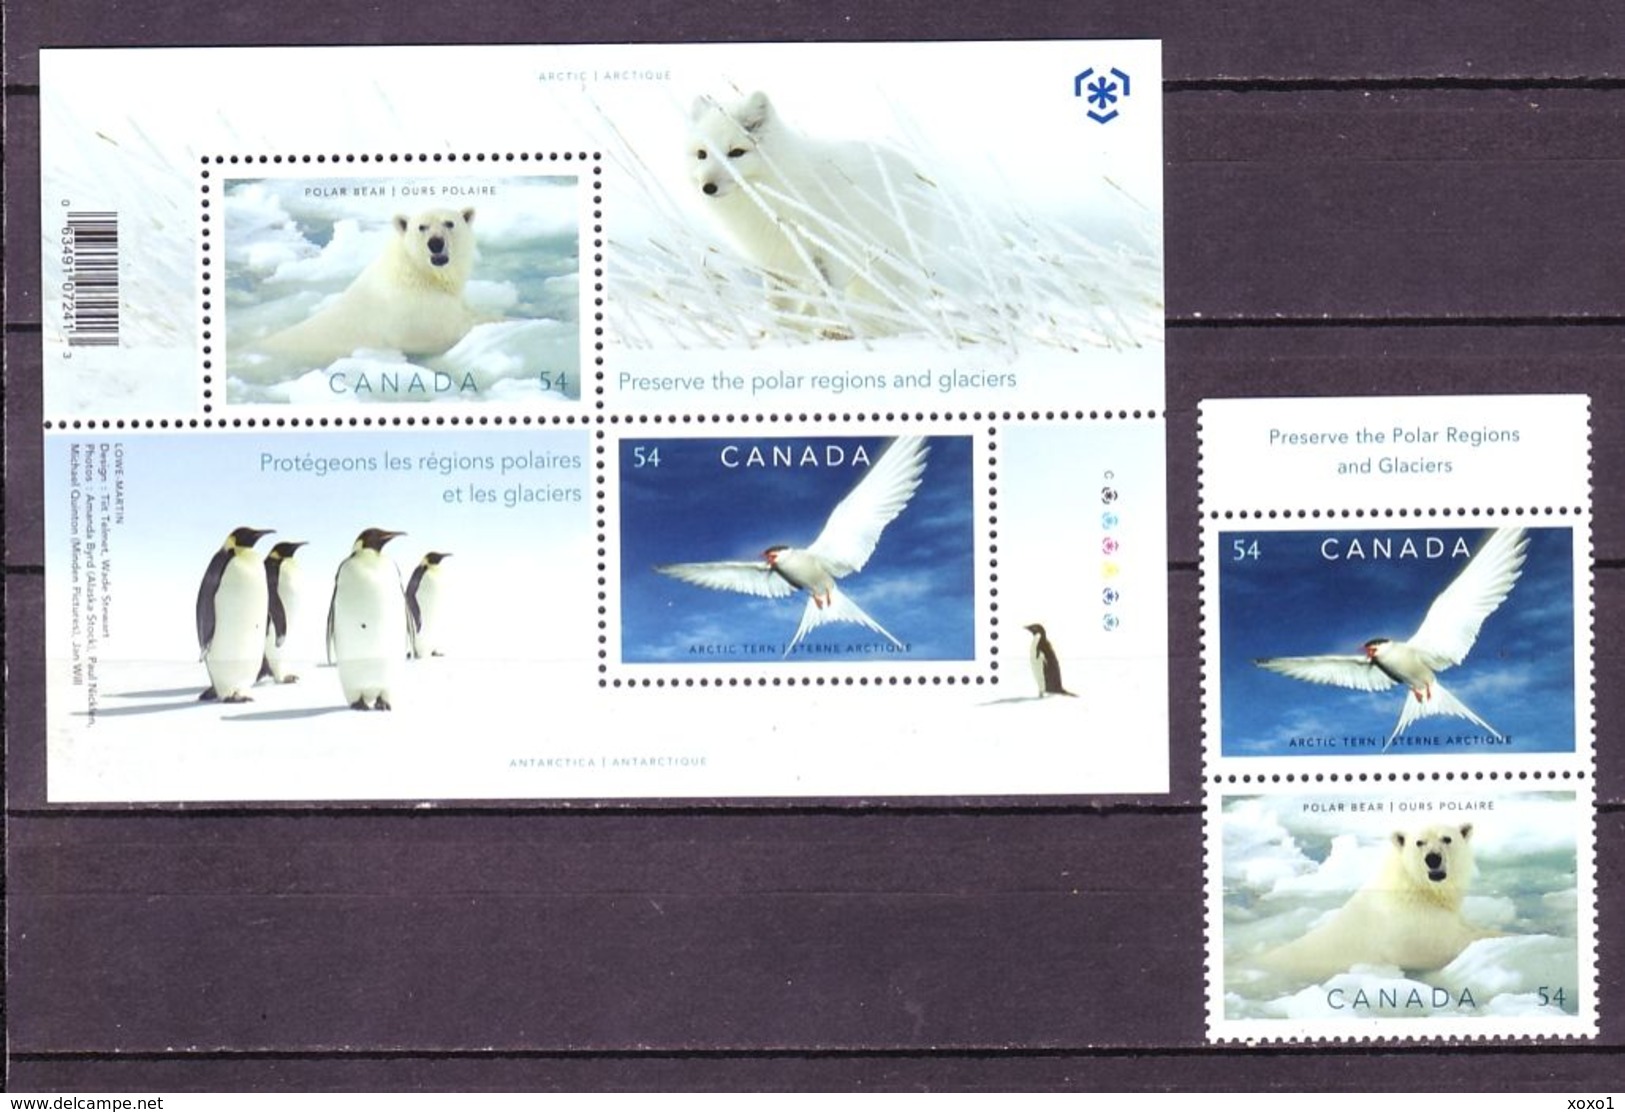 Canada 2009 MiNr. 2547 - 2548 (Block 113) Kanada Fauna BIRDS POLAR YEAR 2v+1bl MNH** 4.80 € - Año Polar Internacional